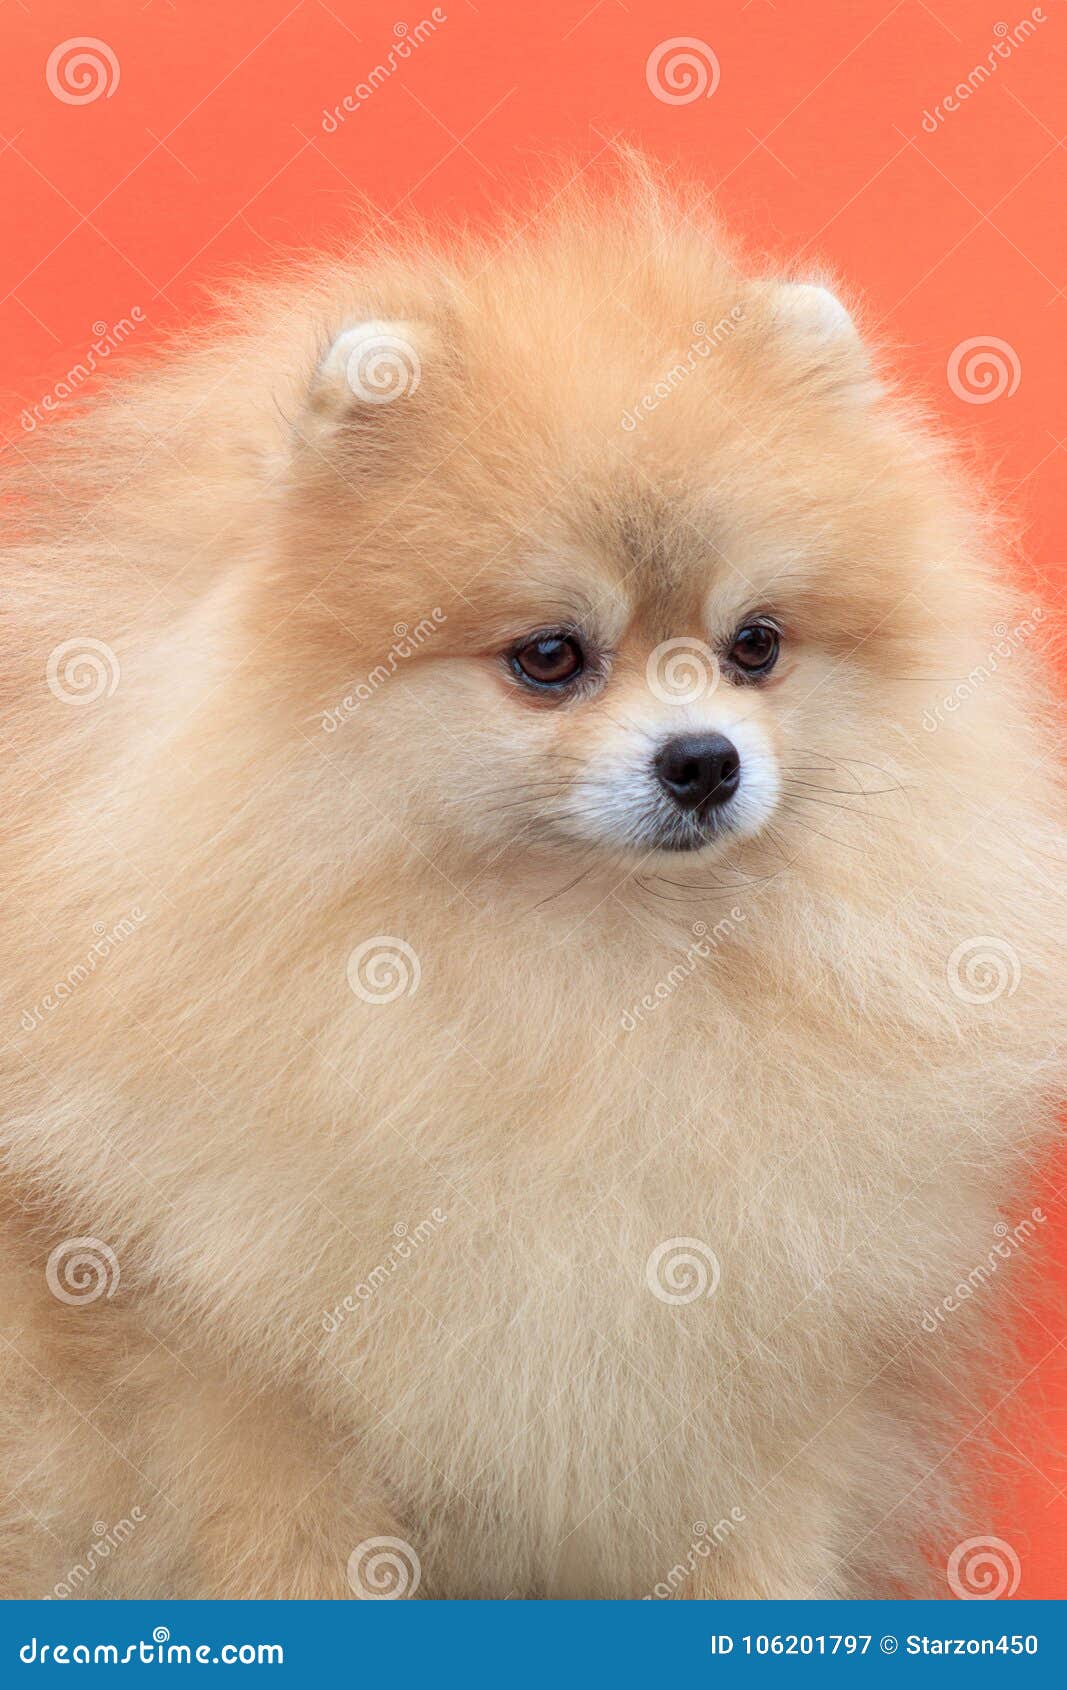 Beautiful Pomeranian Puppy with Thick Coat. Pet Animals Stock Image - Image  of orange, isolated: 106201797